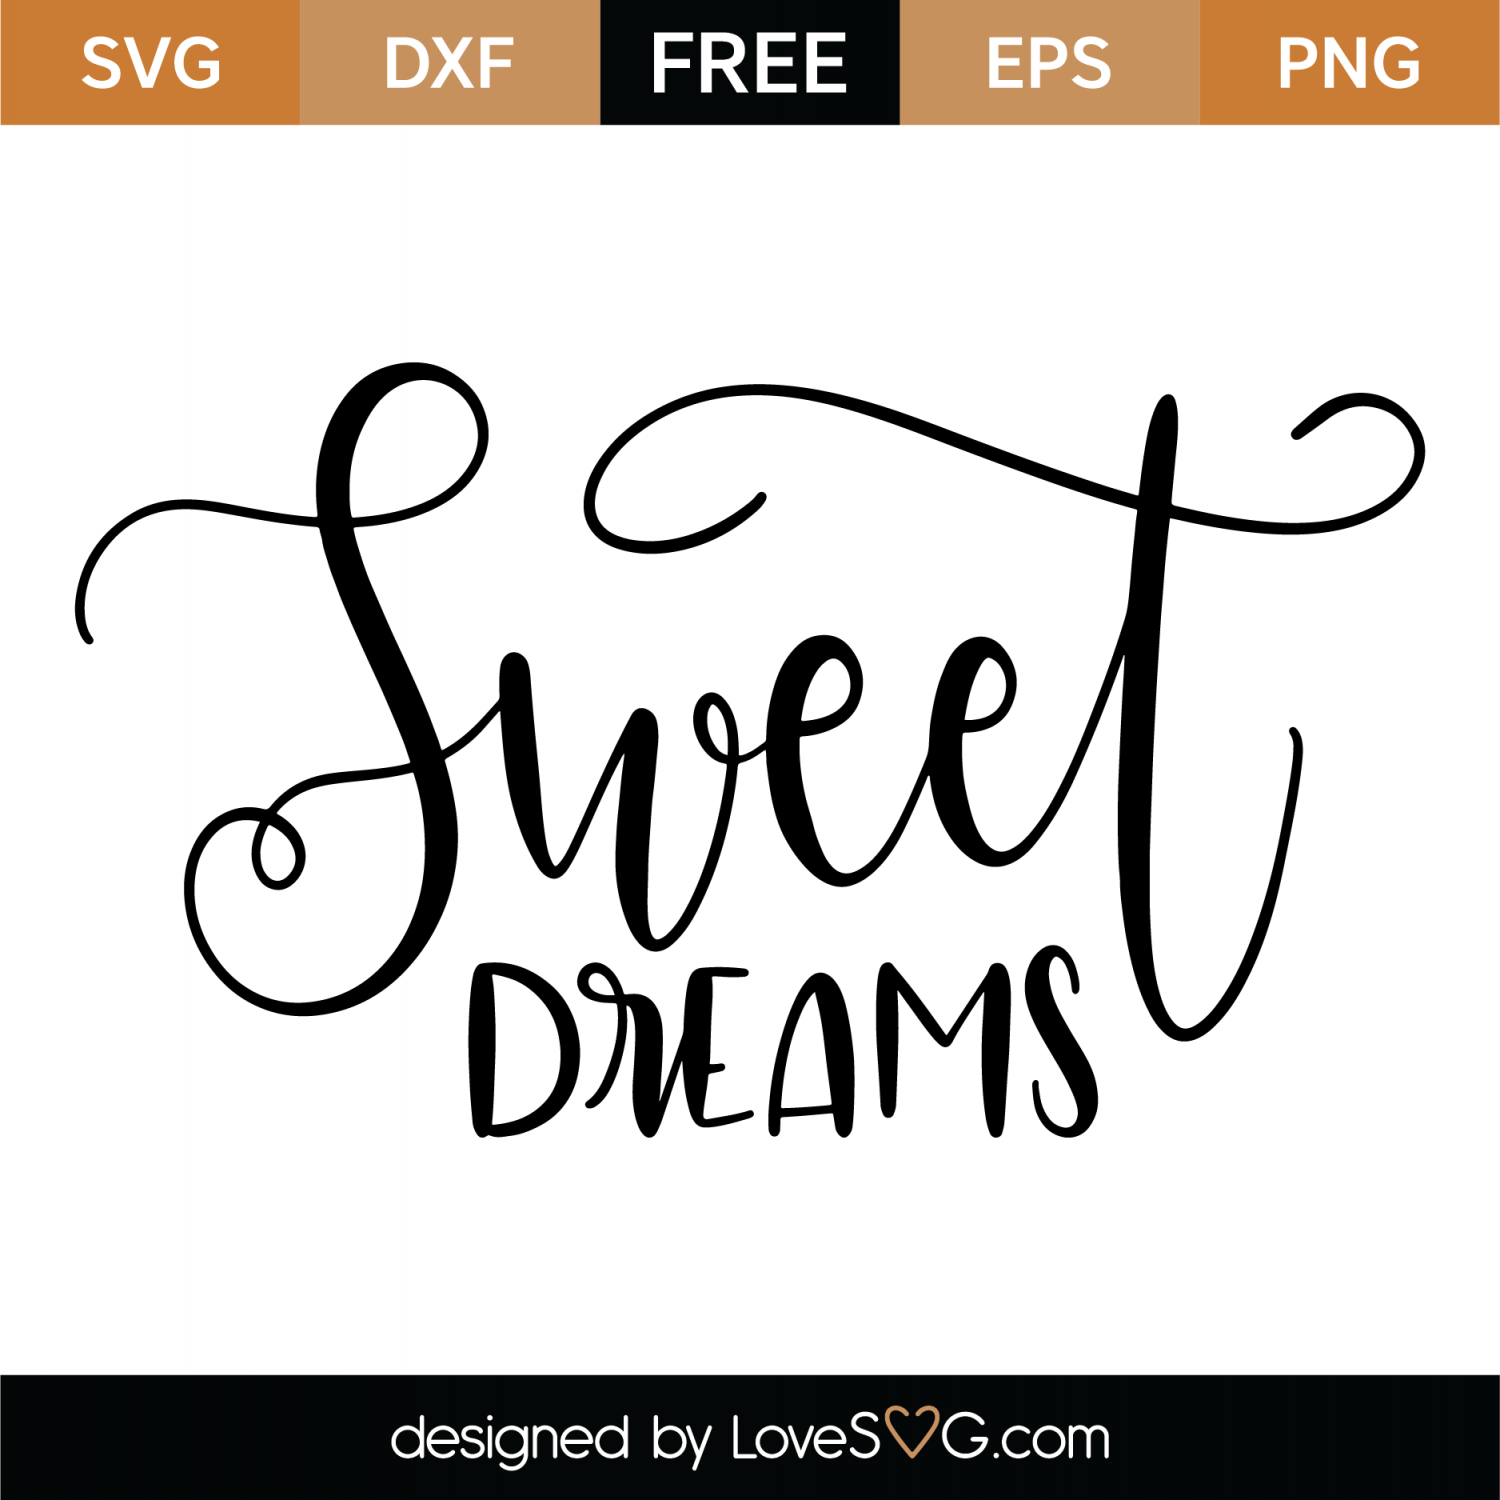 Free Sweet Dreams SVG Cut File | Lovesvg.com